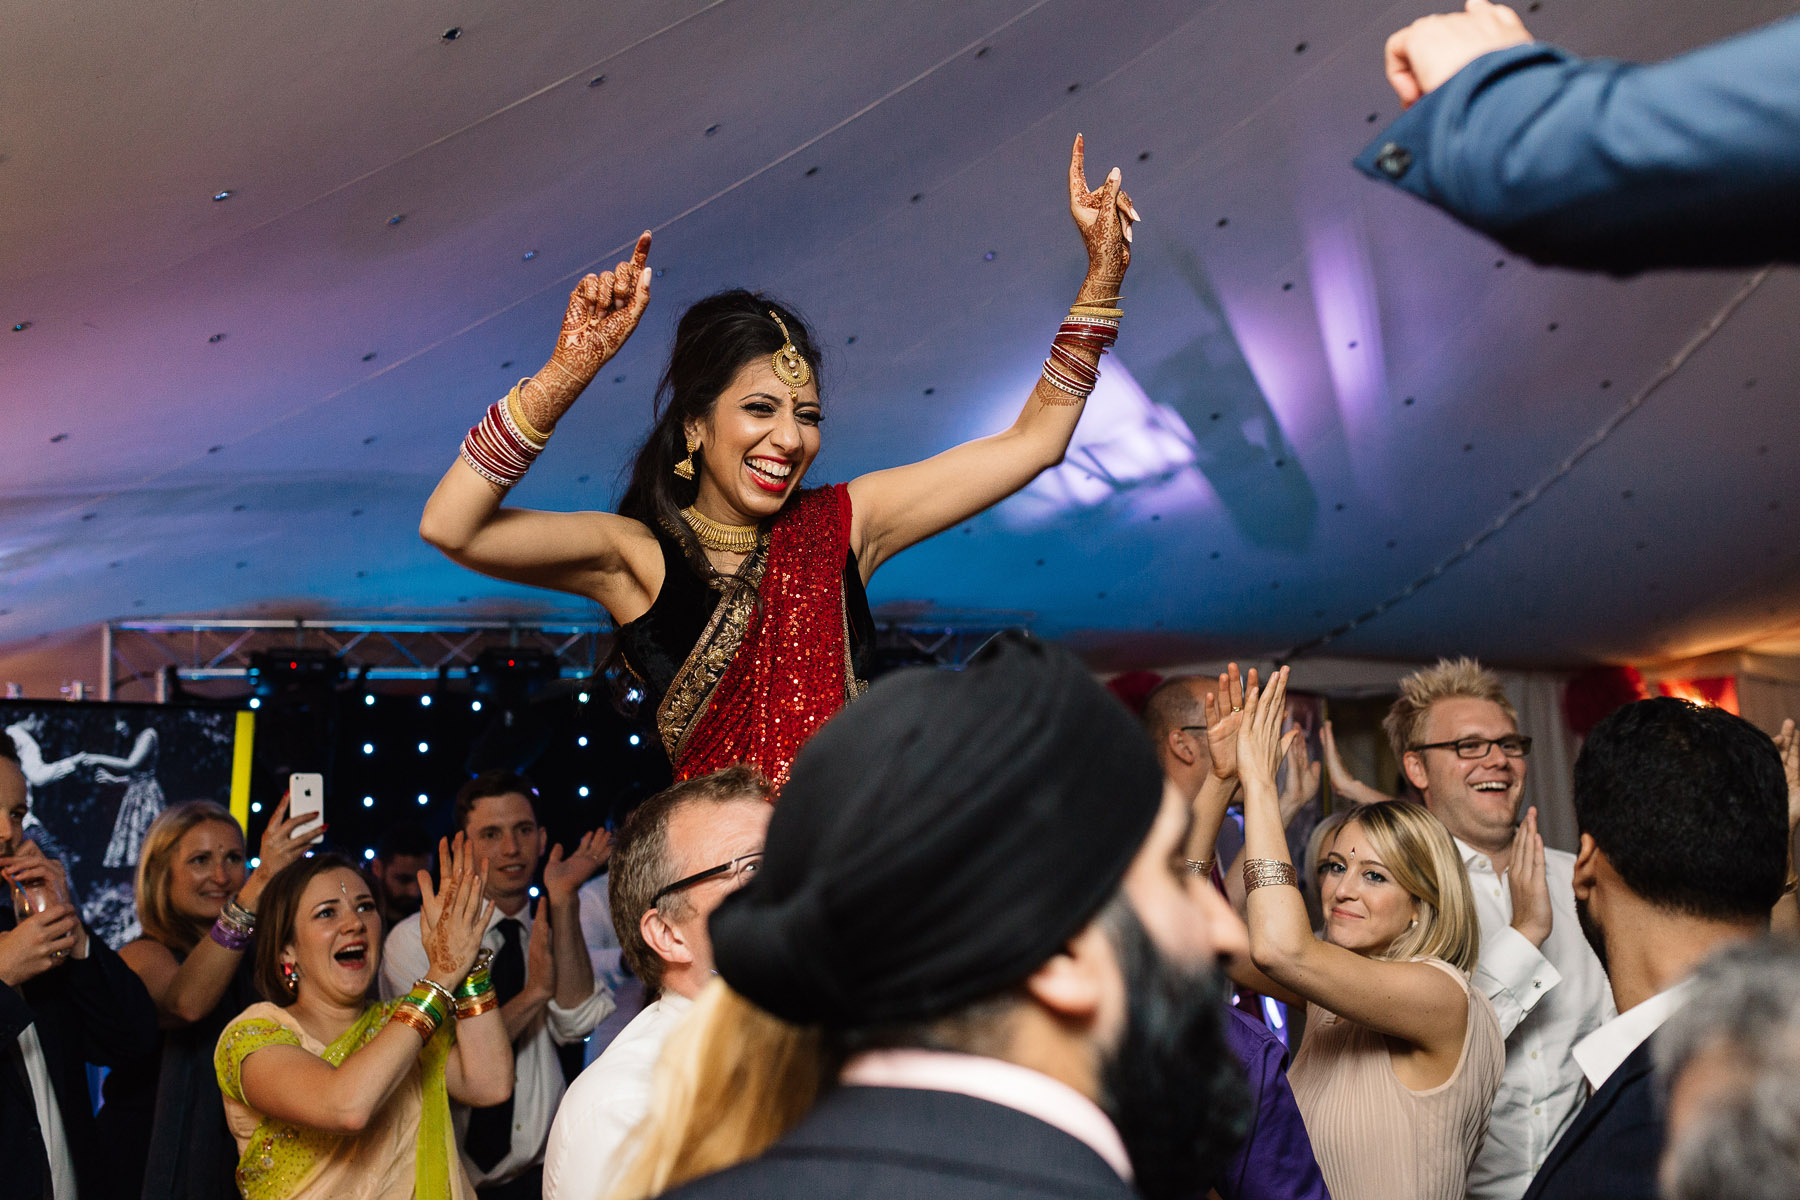 Natasha + Lasitha's Sikh Indian and Buddhist fusion wedding at Scampston Hall near Malton in North Yorkshire